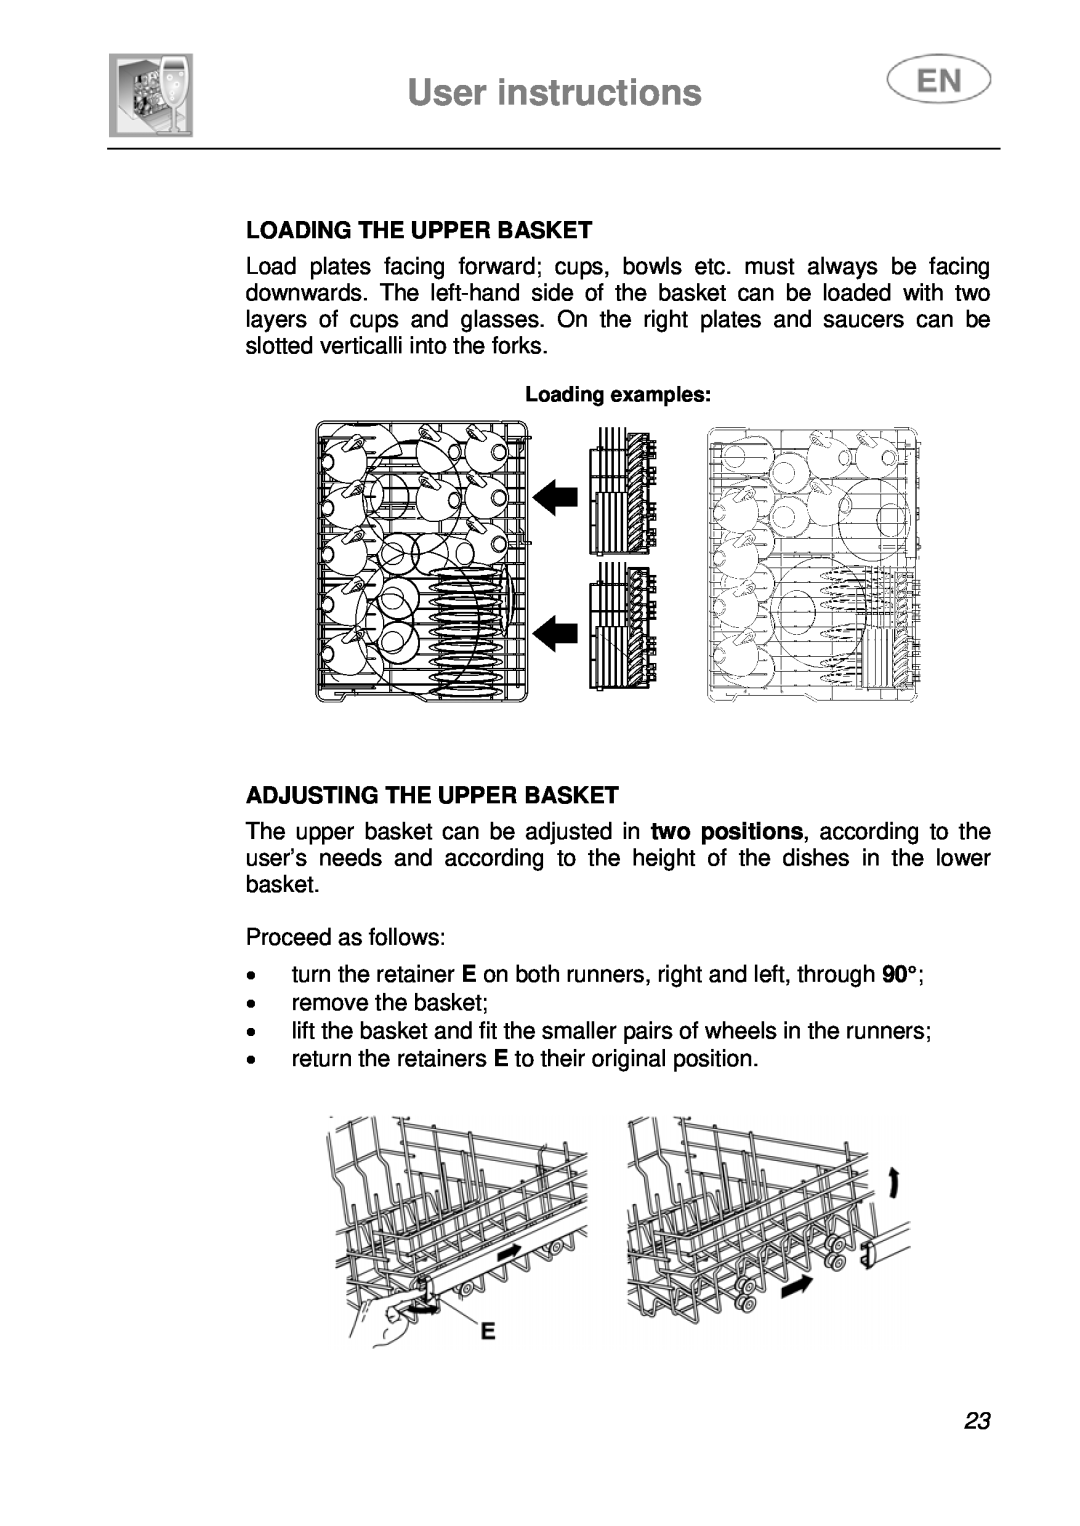 CDA WC460 manual User instructions, Loading The Upper Basket, Adjusting The Upper Basket 